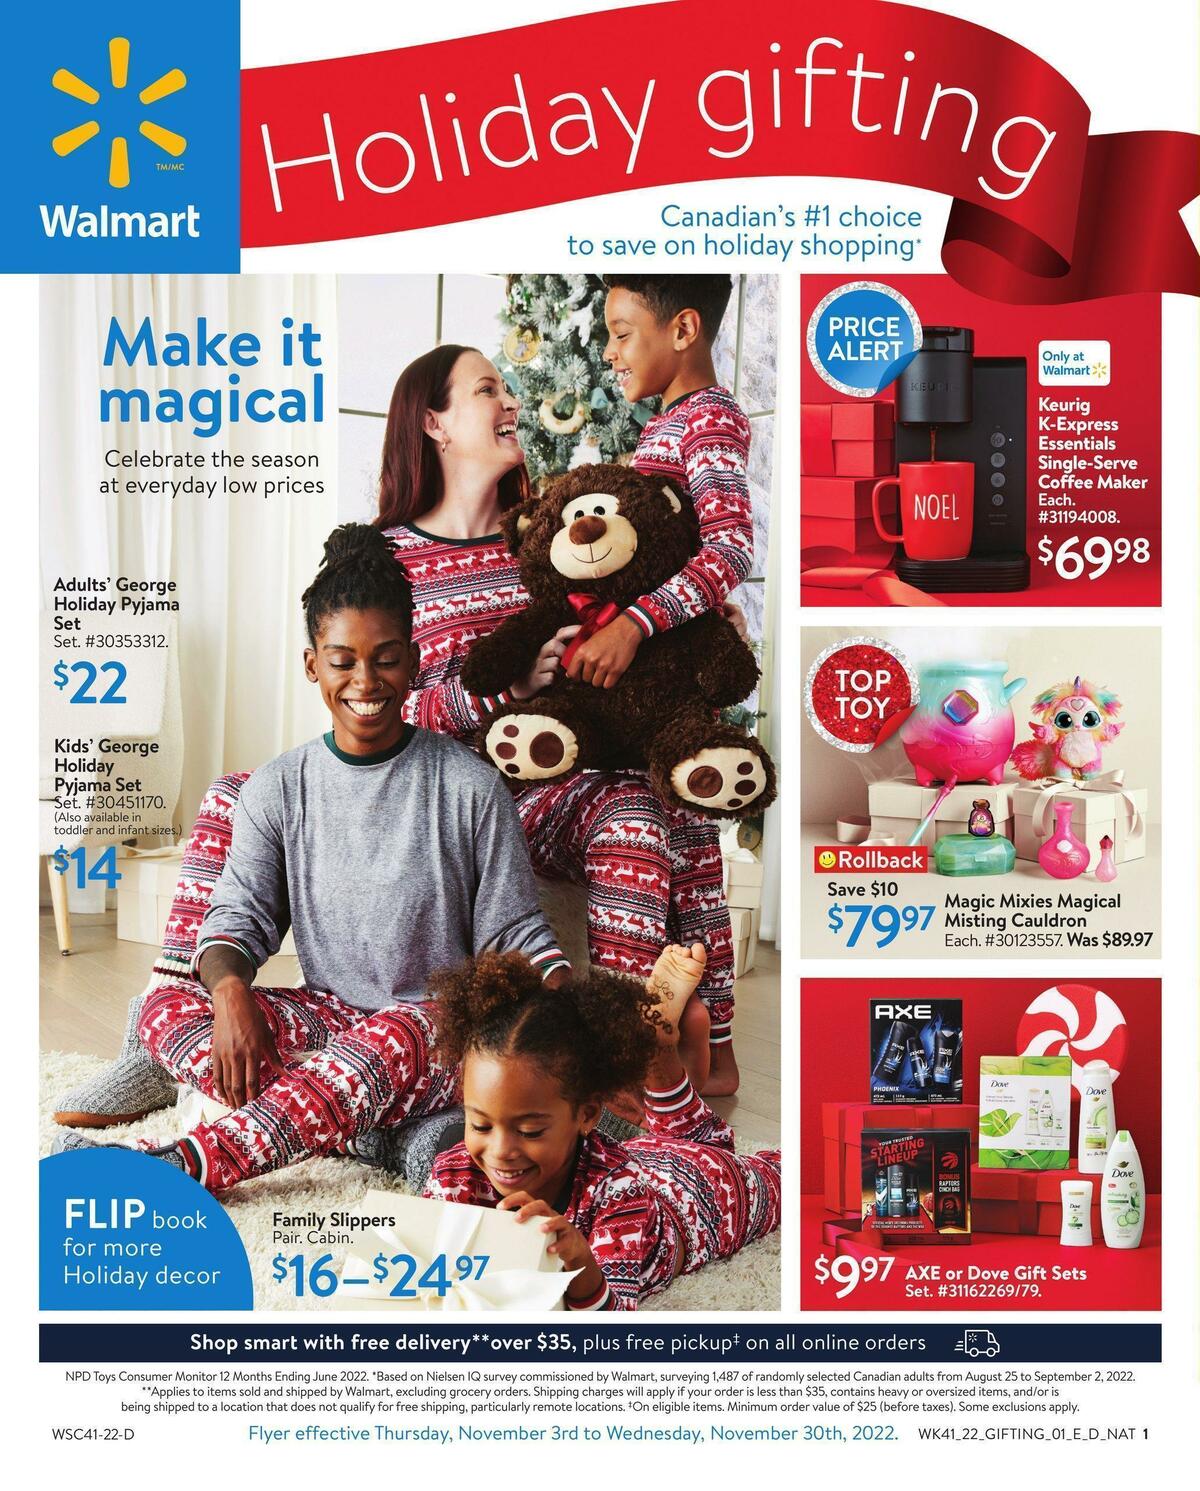 Walmart Holiday Gifting Flyer from November 3